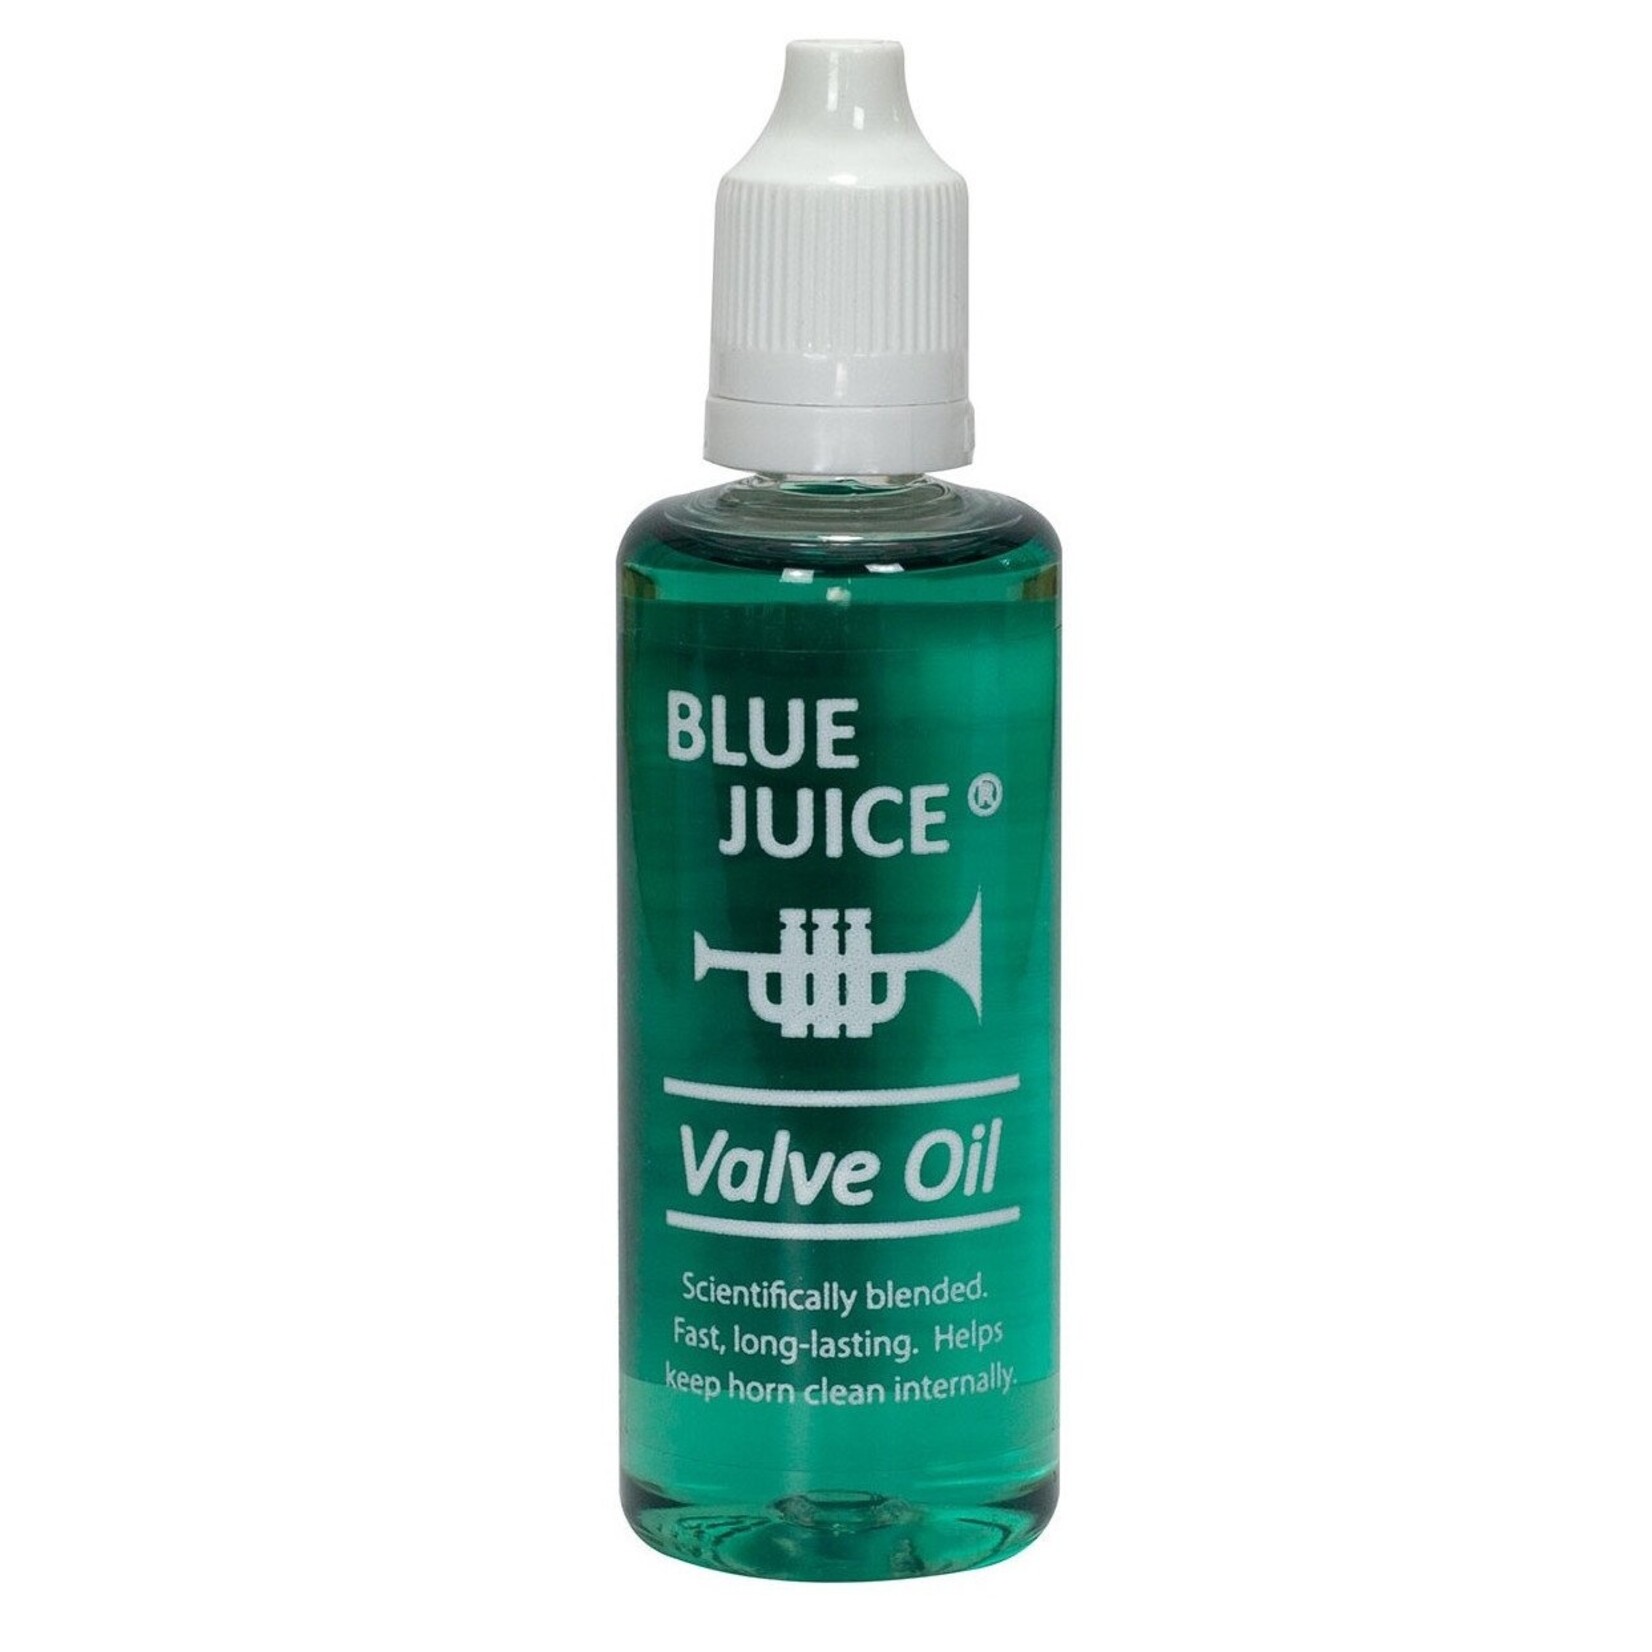 Blue Juice Valve Oil 2 oz. Bottle